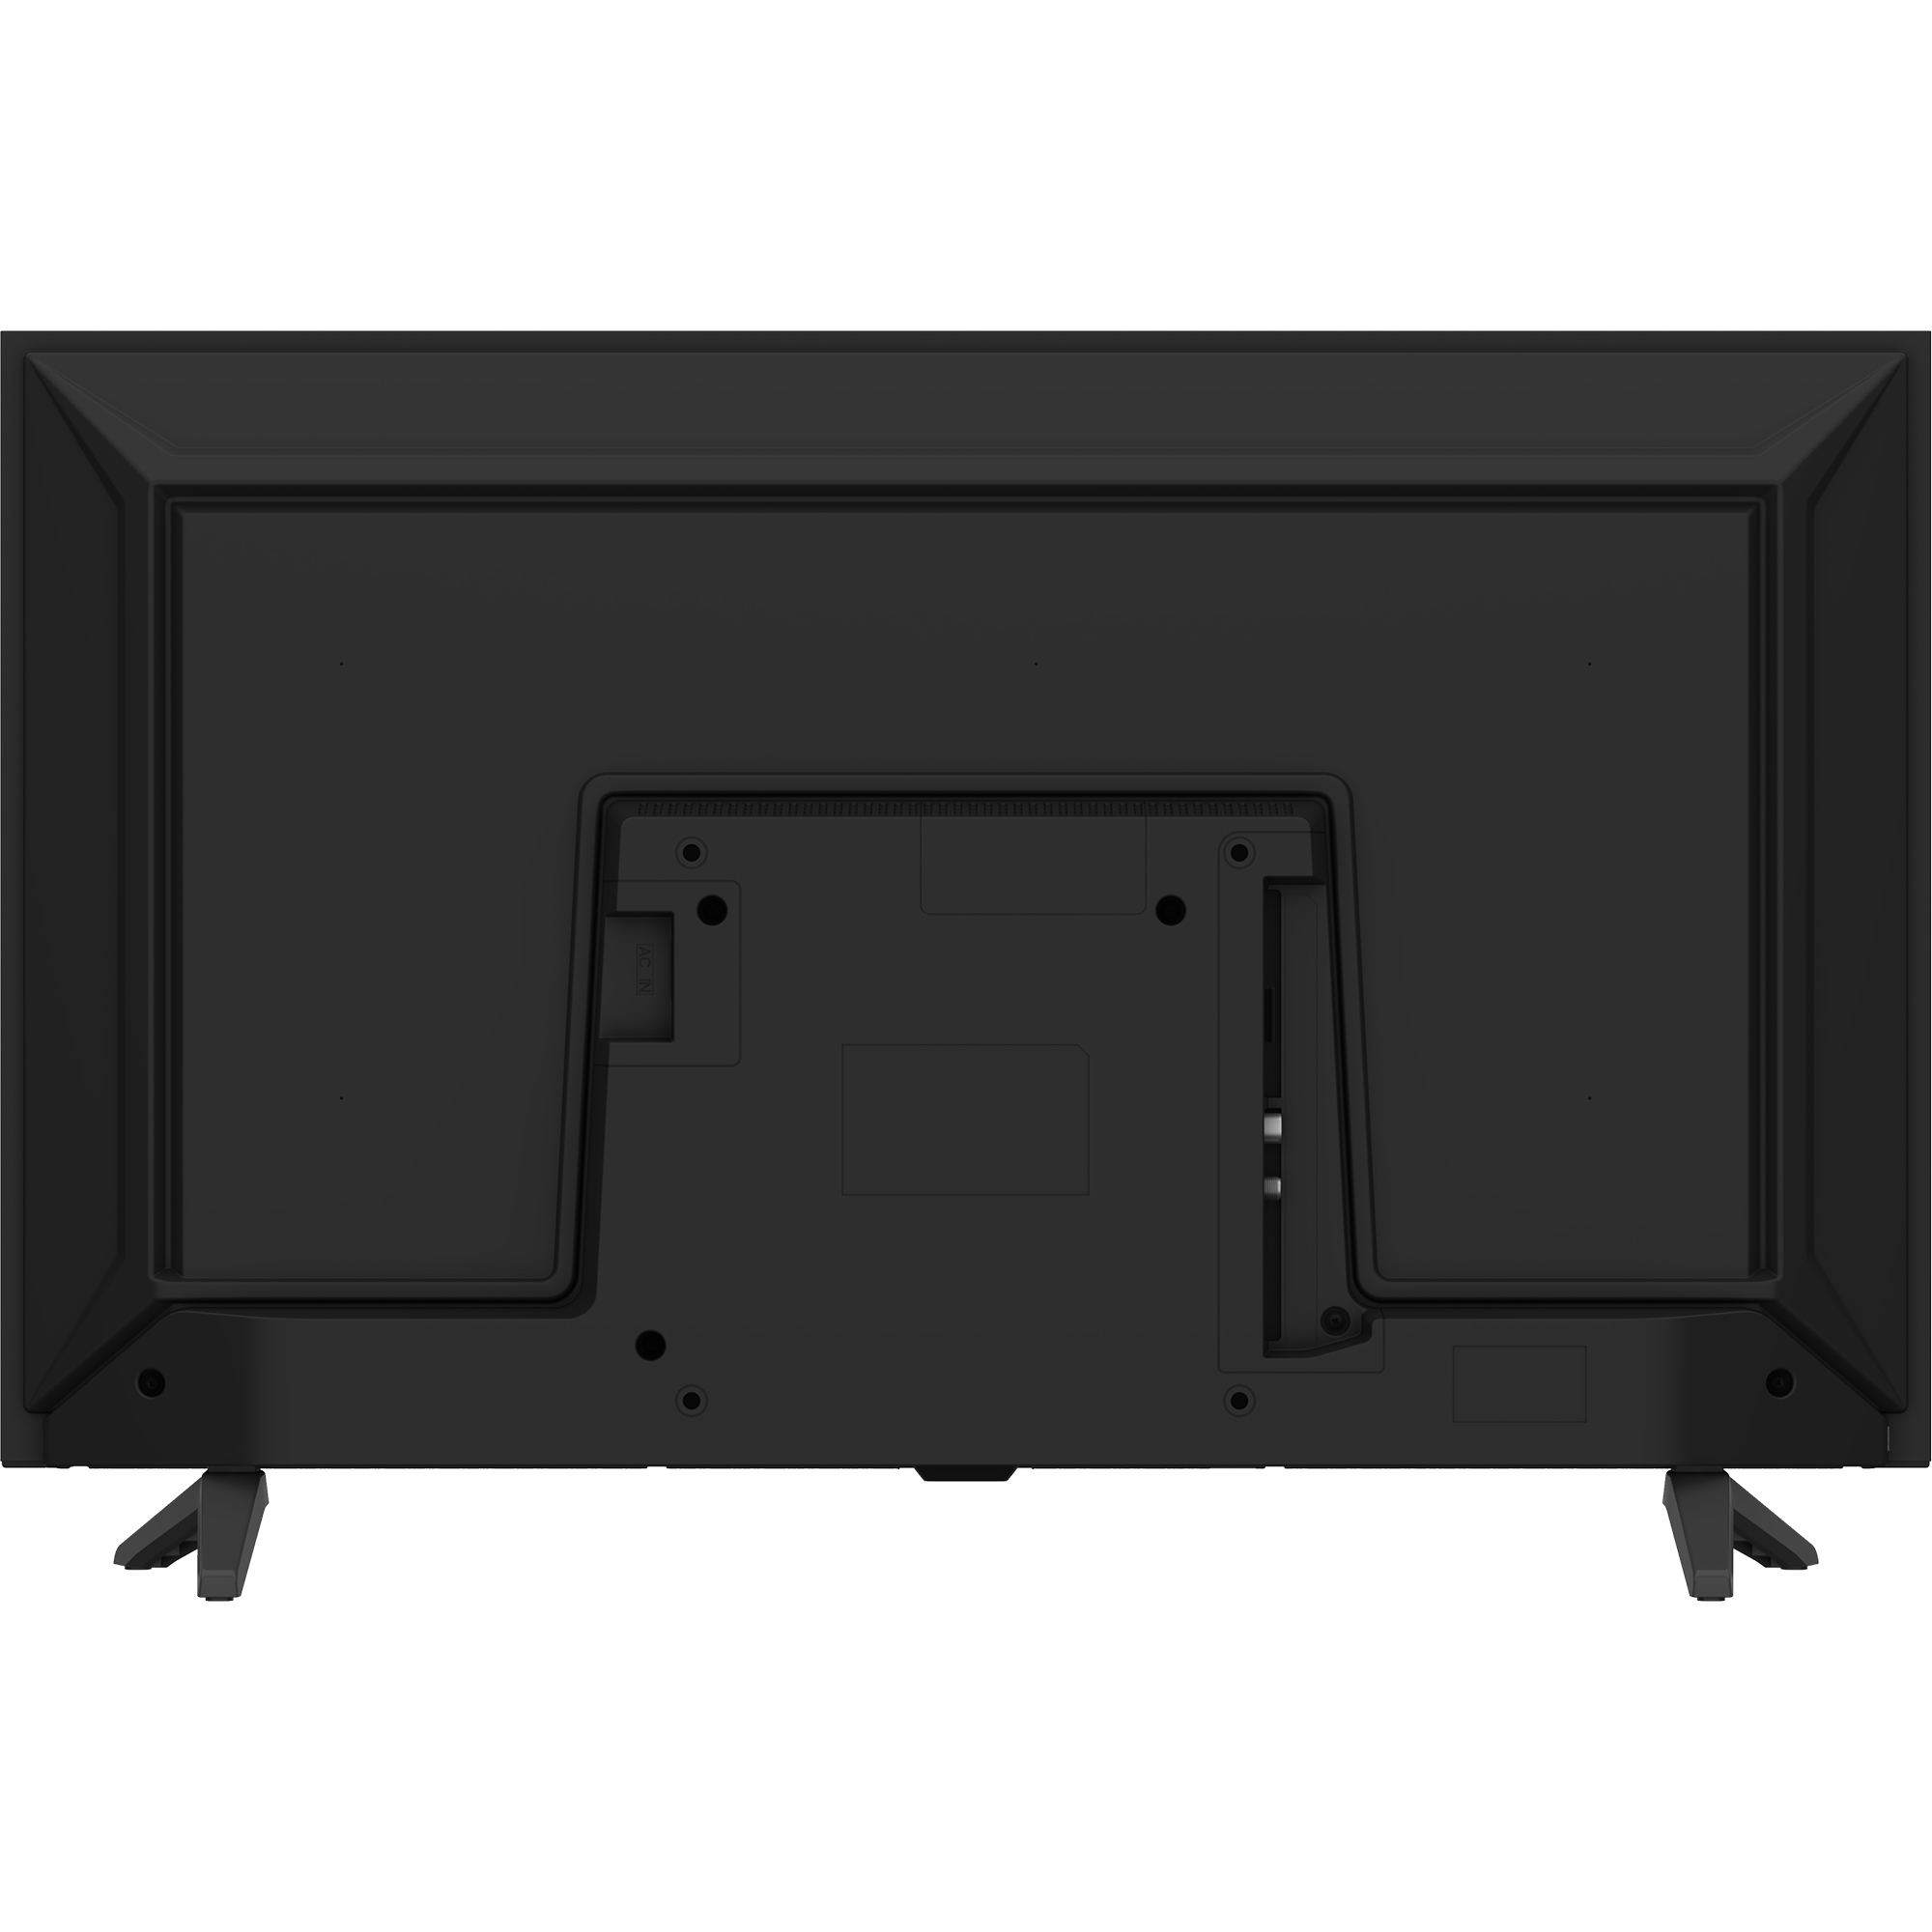 Телевизор Grundig 32GGH6900B, цвет черный - фото 6